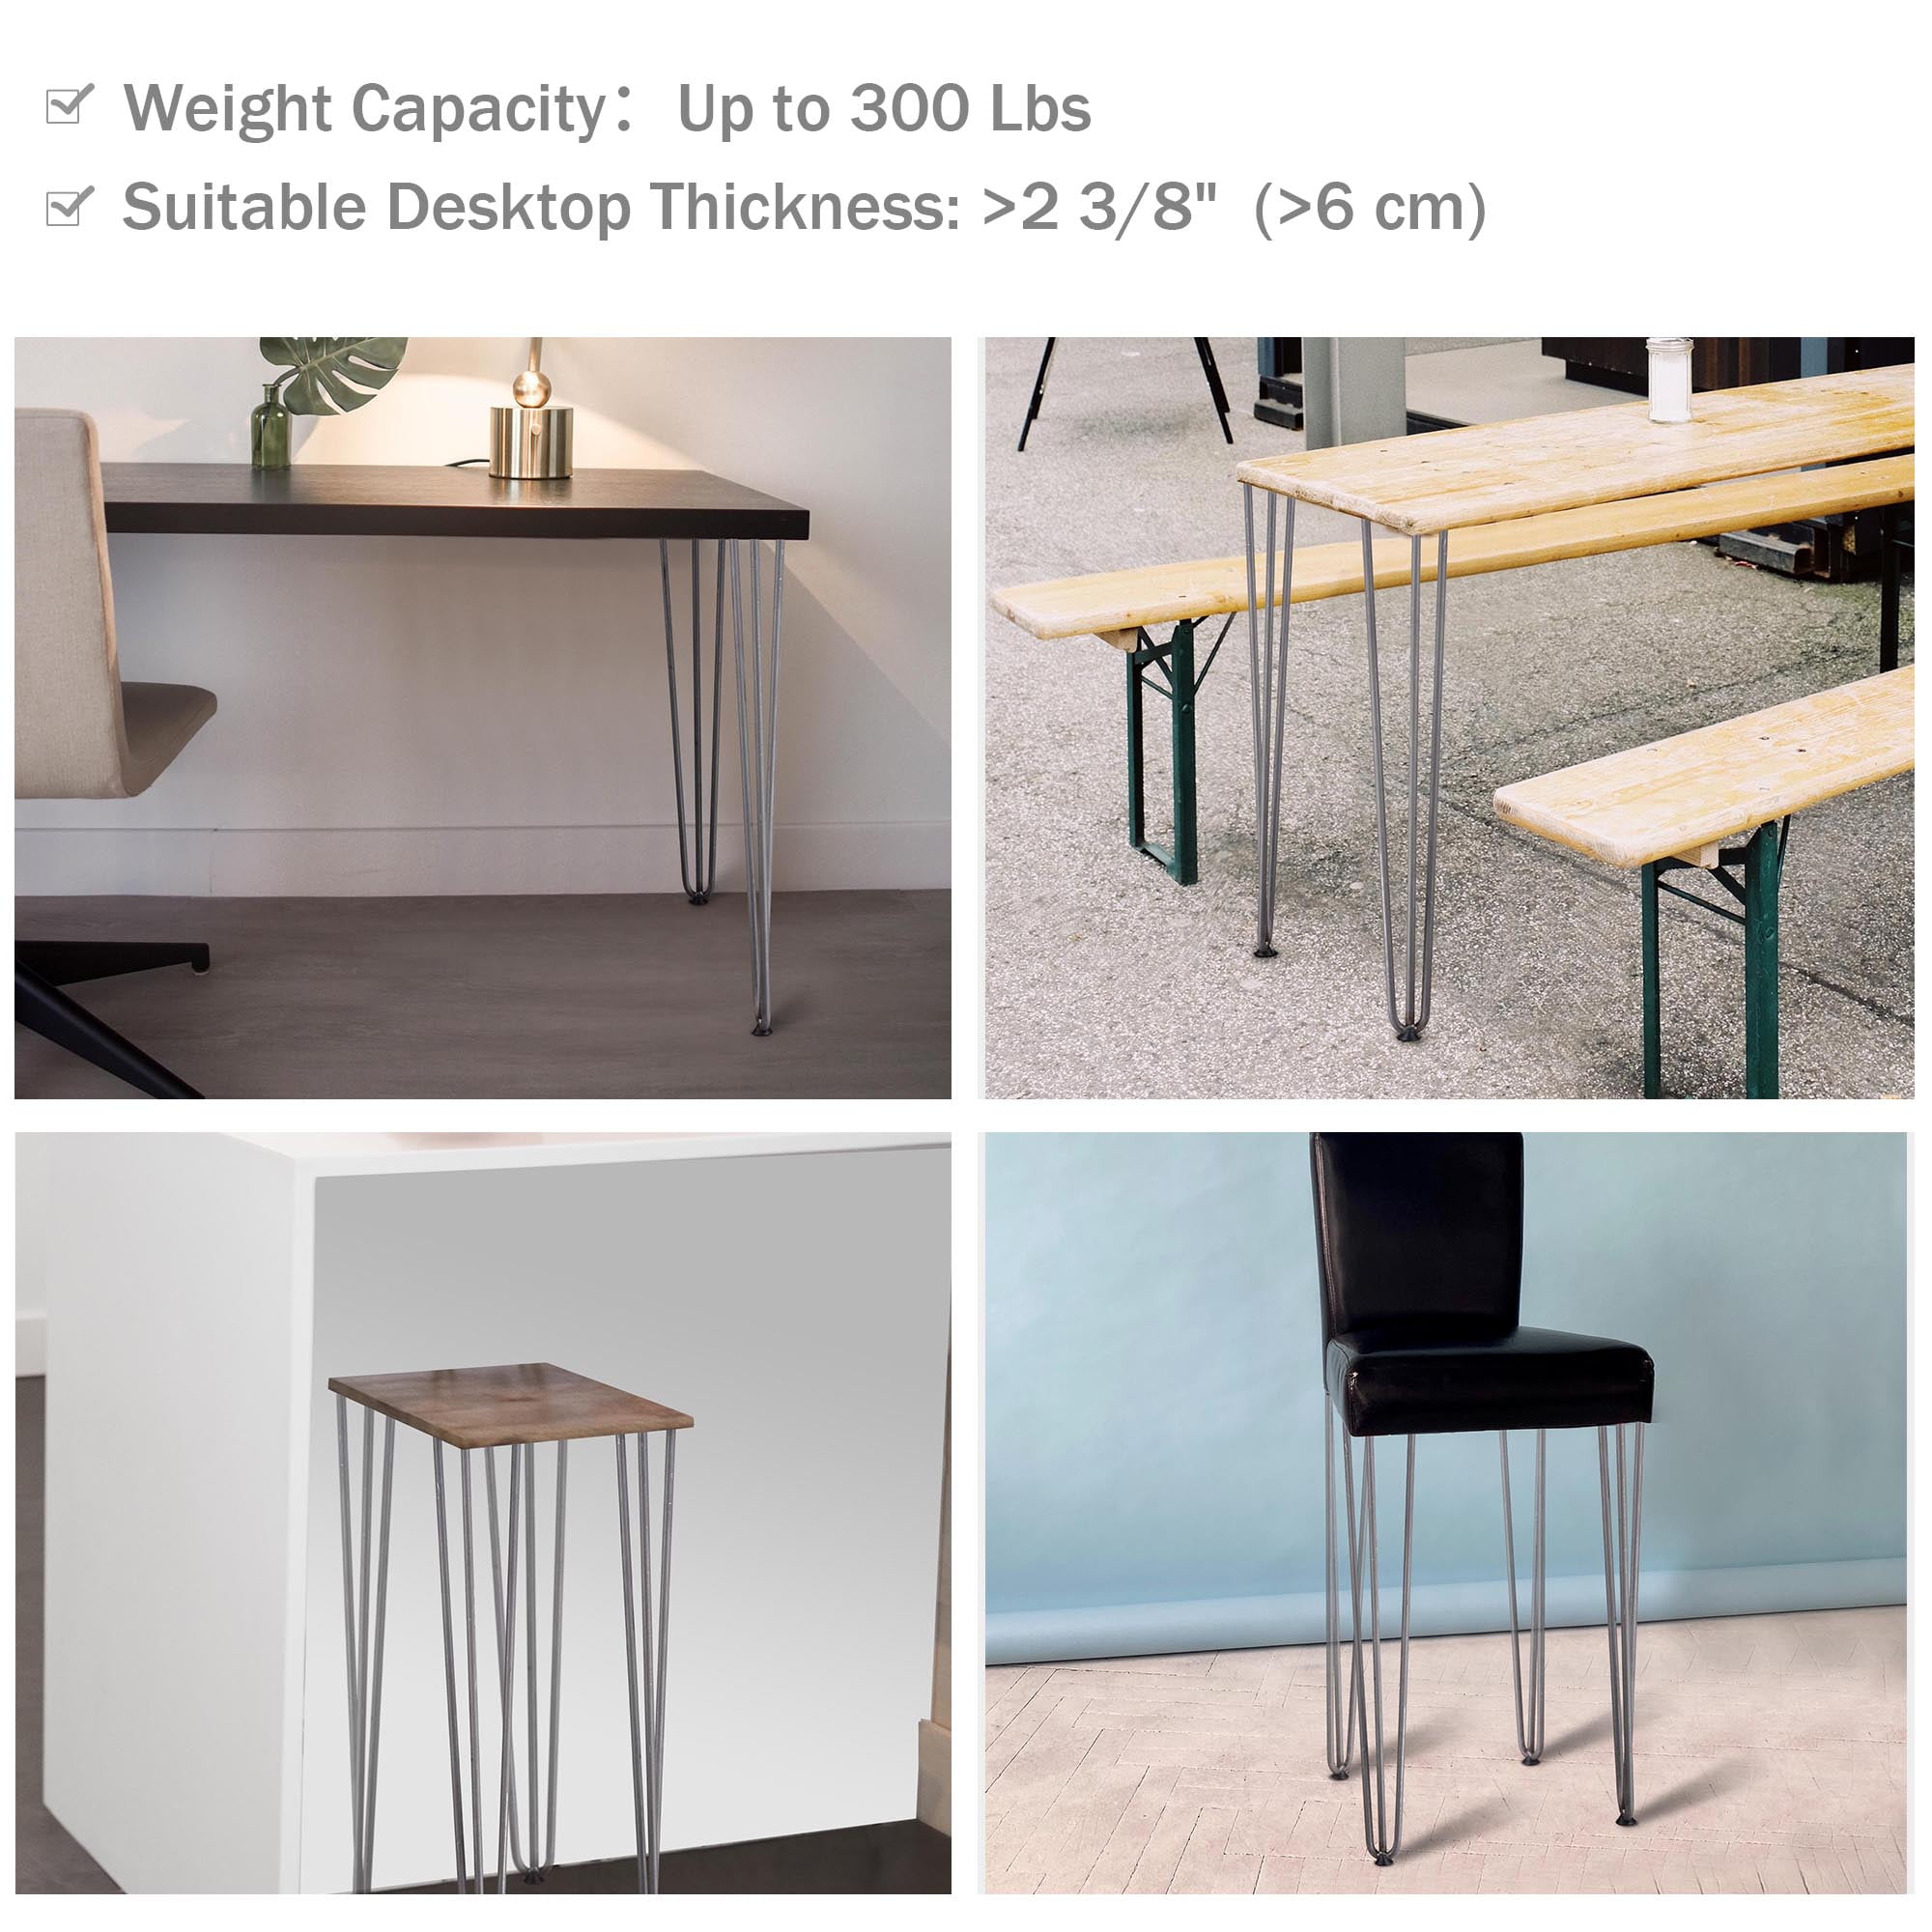 4x Set Hairpin Coffee Table Leg Heavy Duty Metal Iron 3 Rods Furniture Desk Legs 